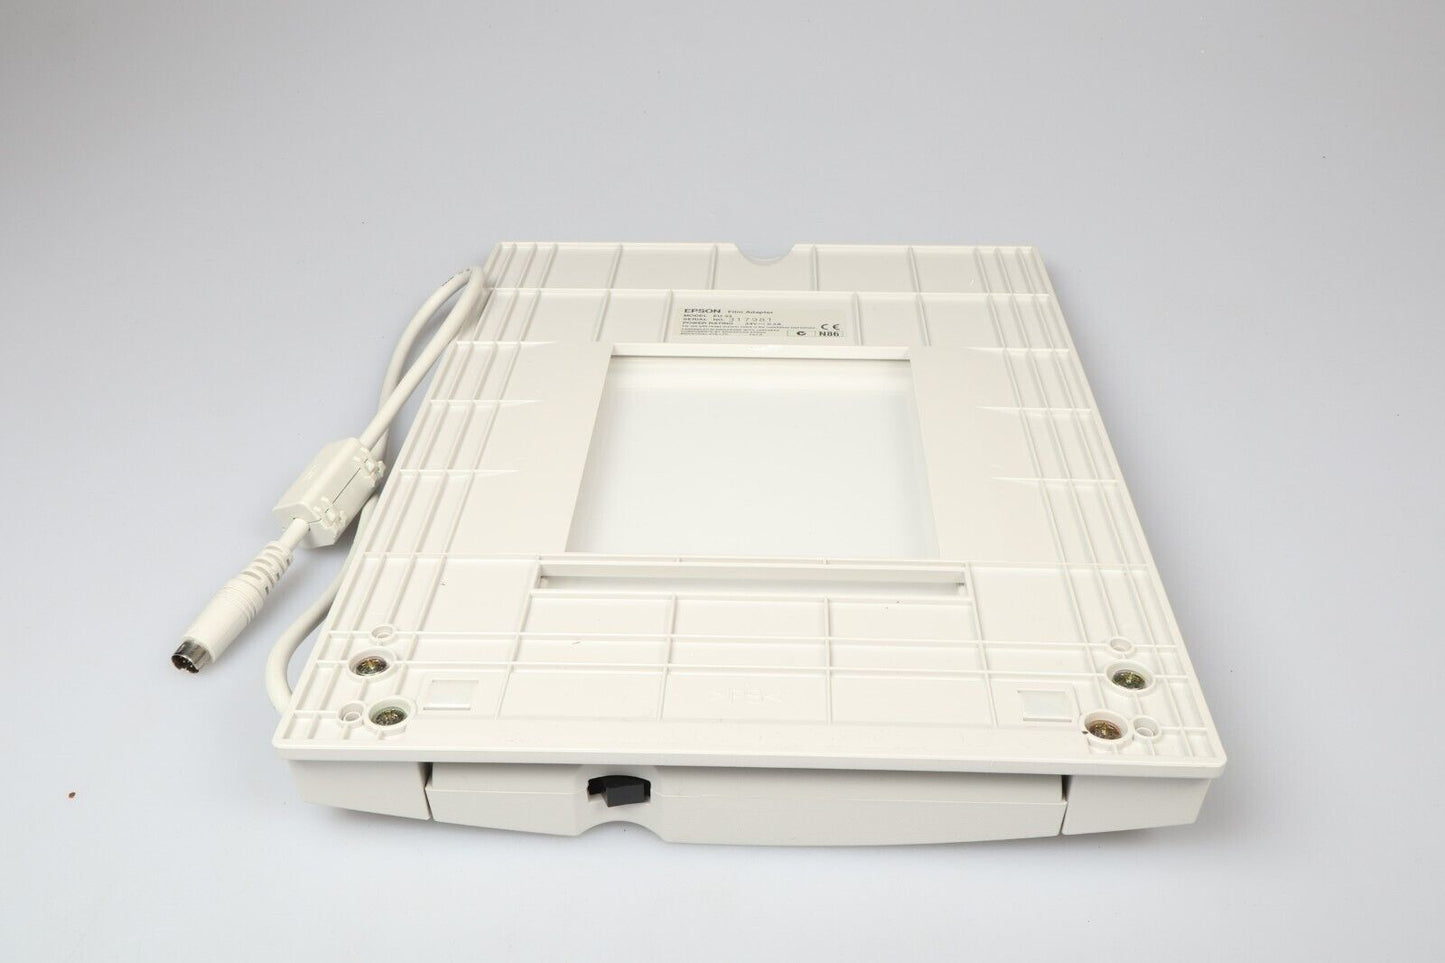 Epson Film Adapter | Model EU-33 | Photo Negatives Scanner